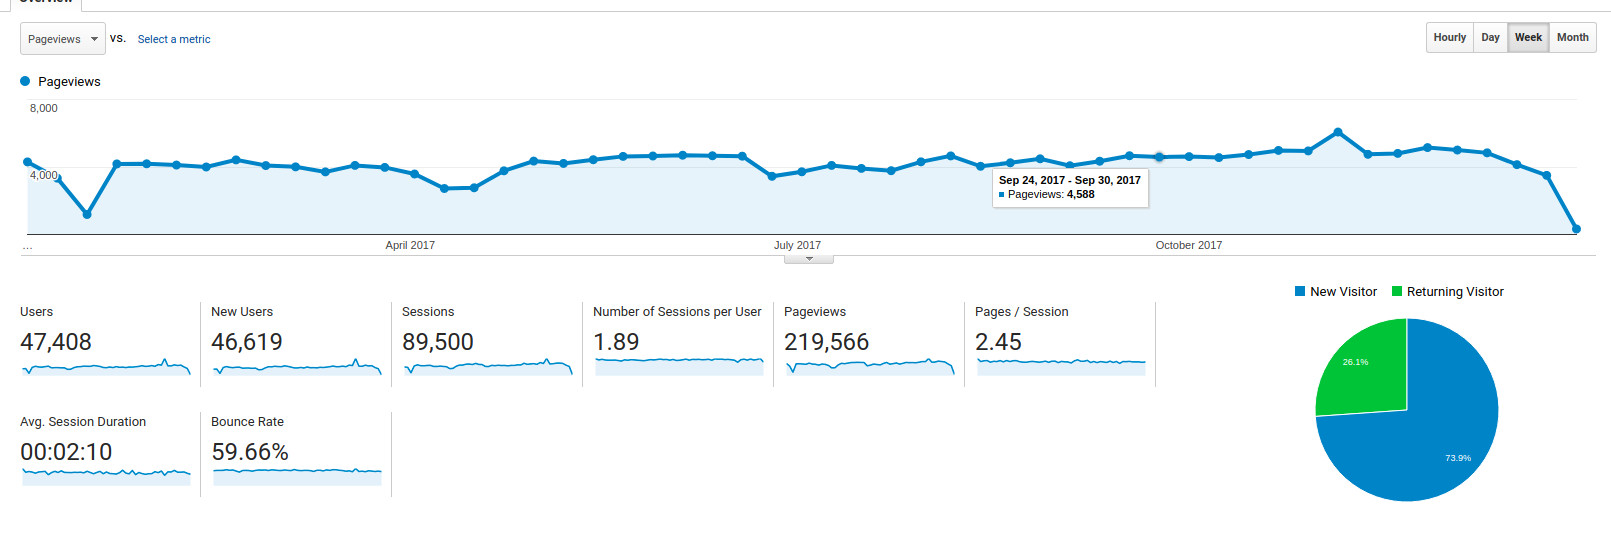 Screenshot of Google Analytics dashboard showing a variety of charts and metrics